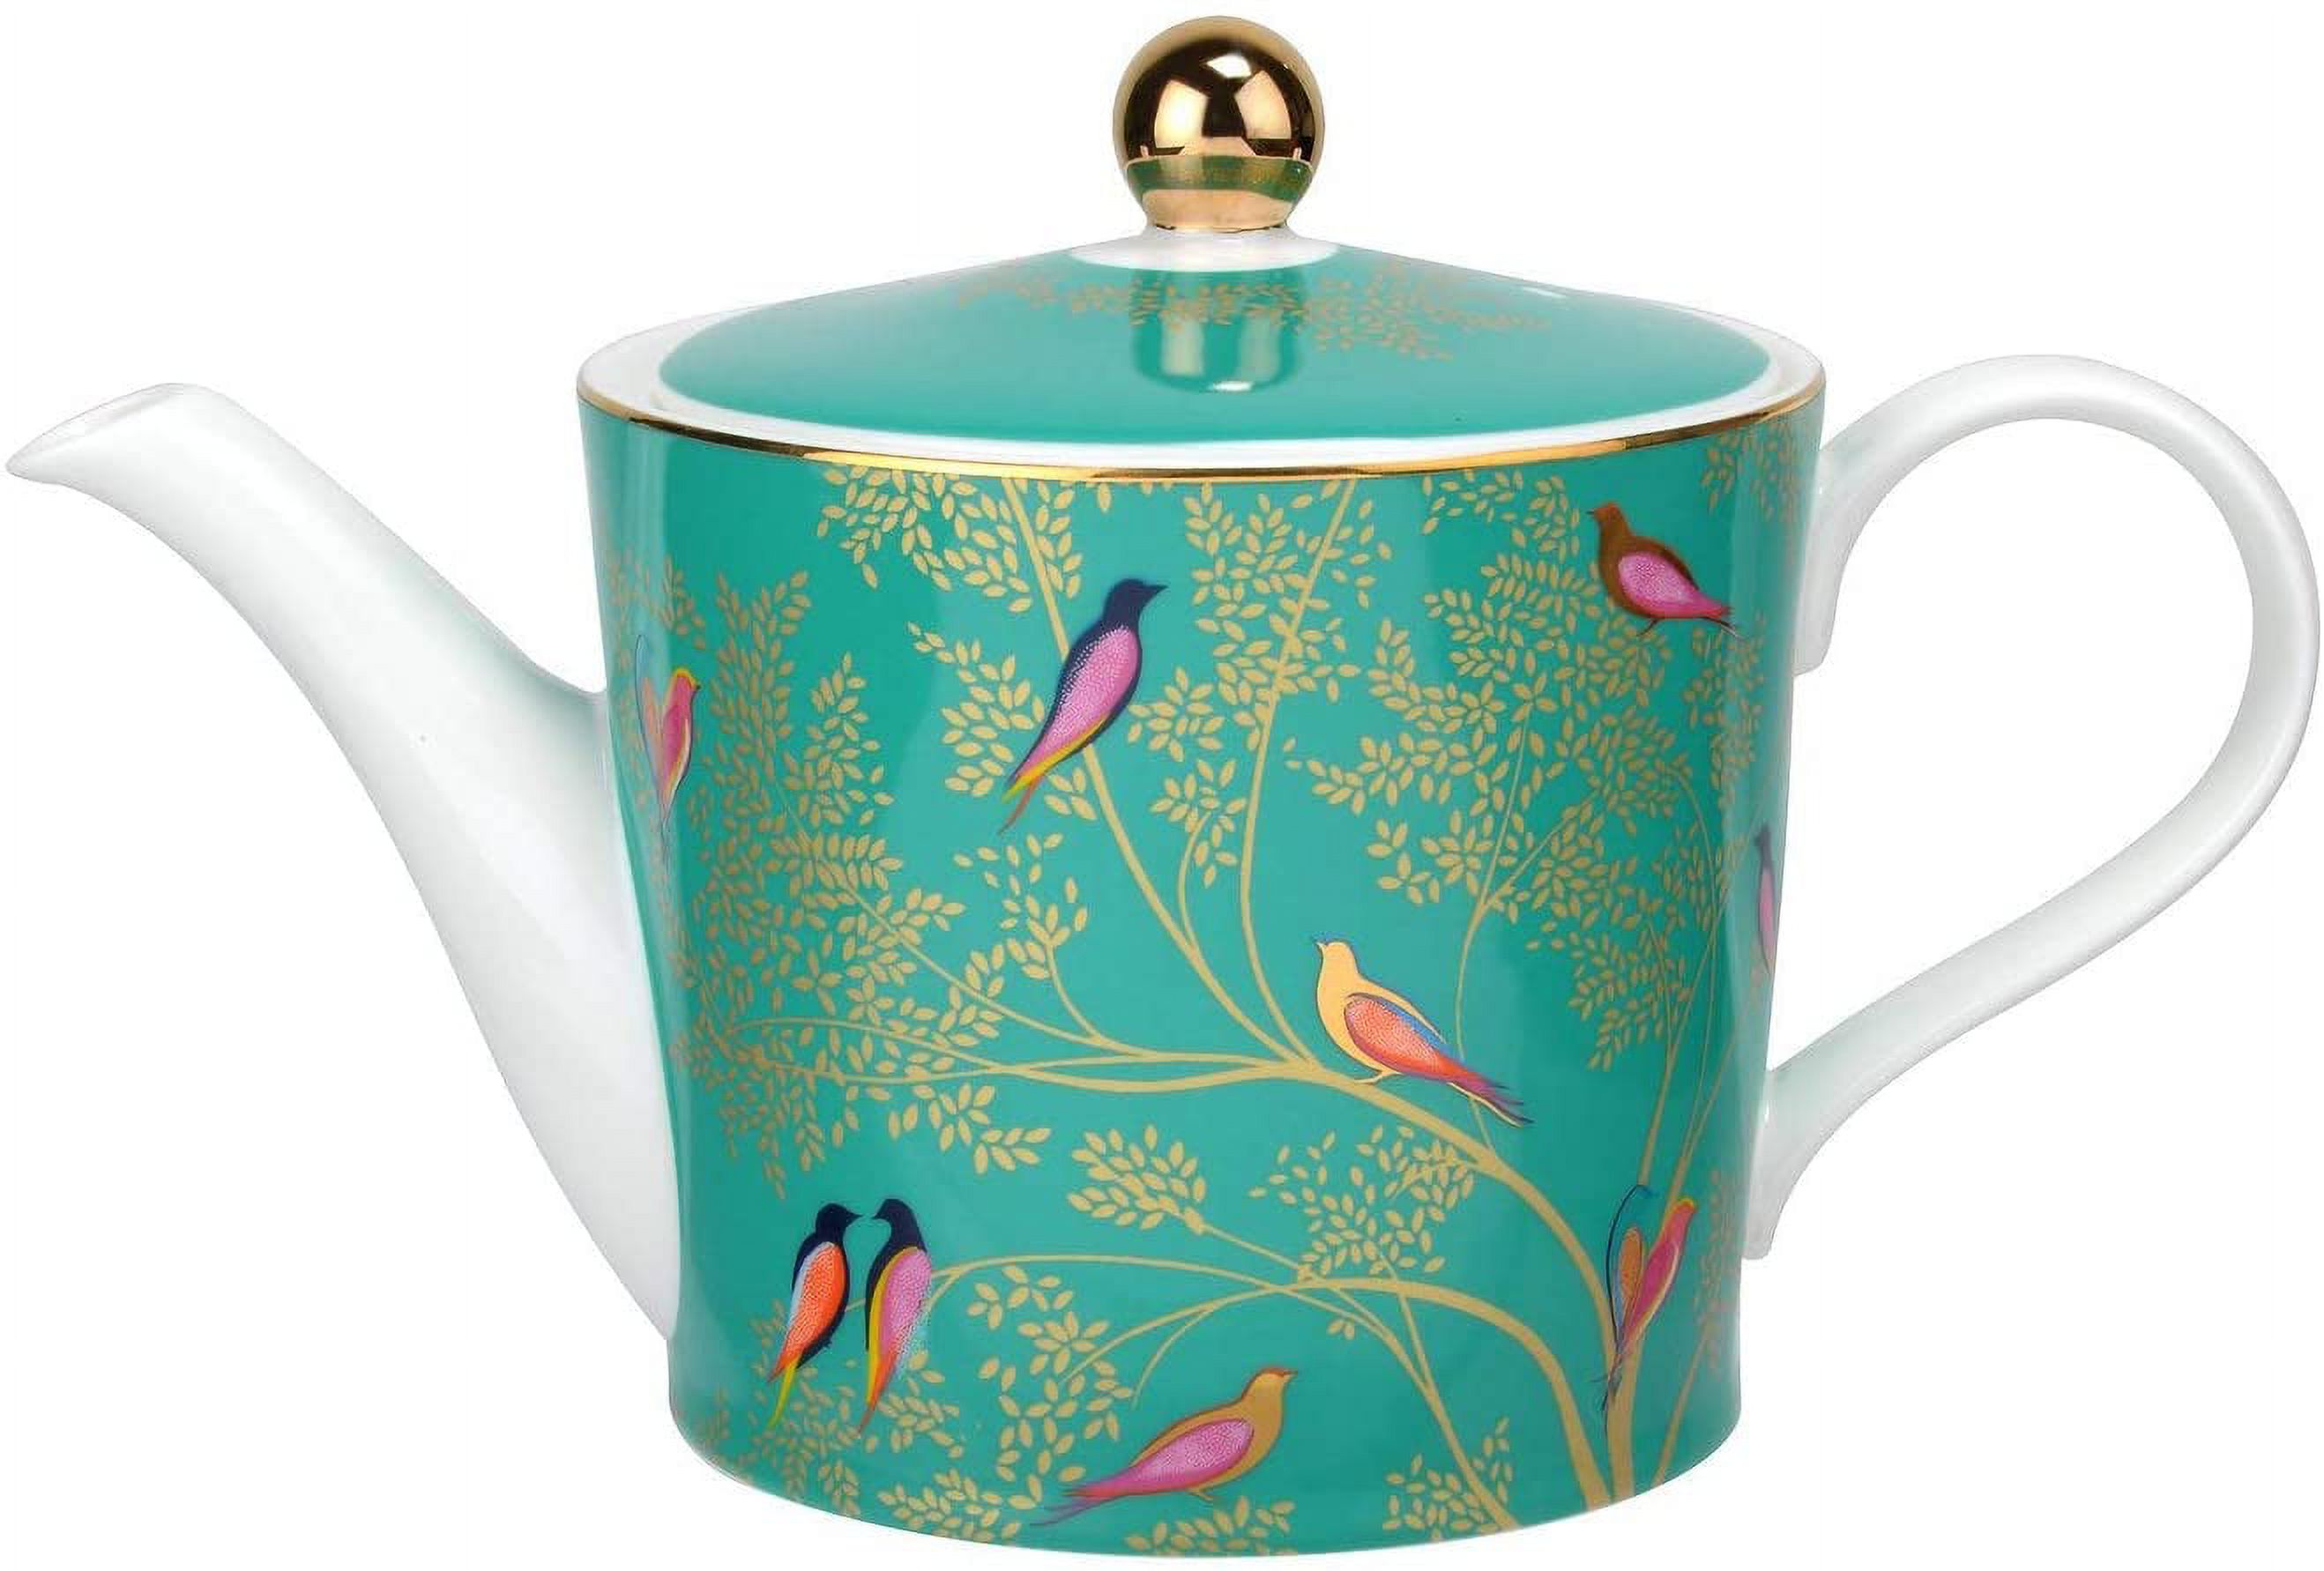 Portmeirion Sara Miller London Chelsea Collection 2 Pint Teapot - Green - image 1 of 8